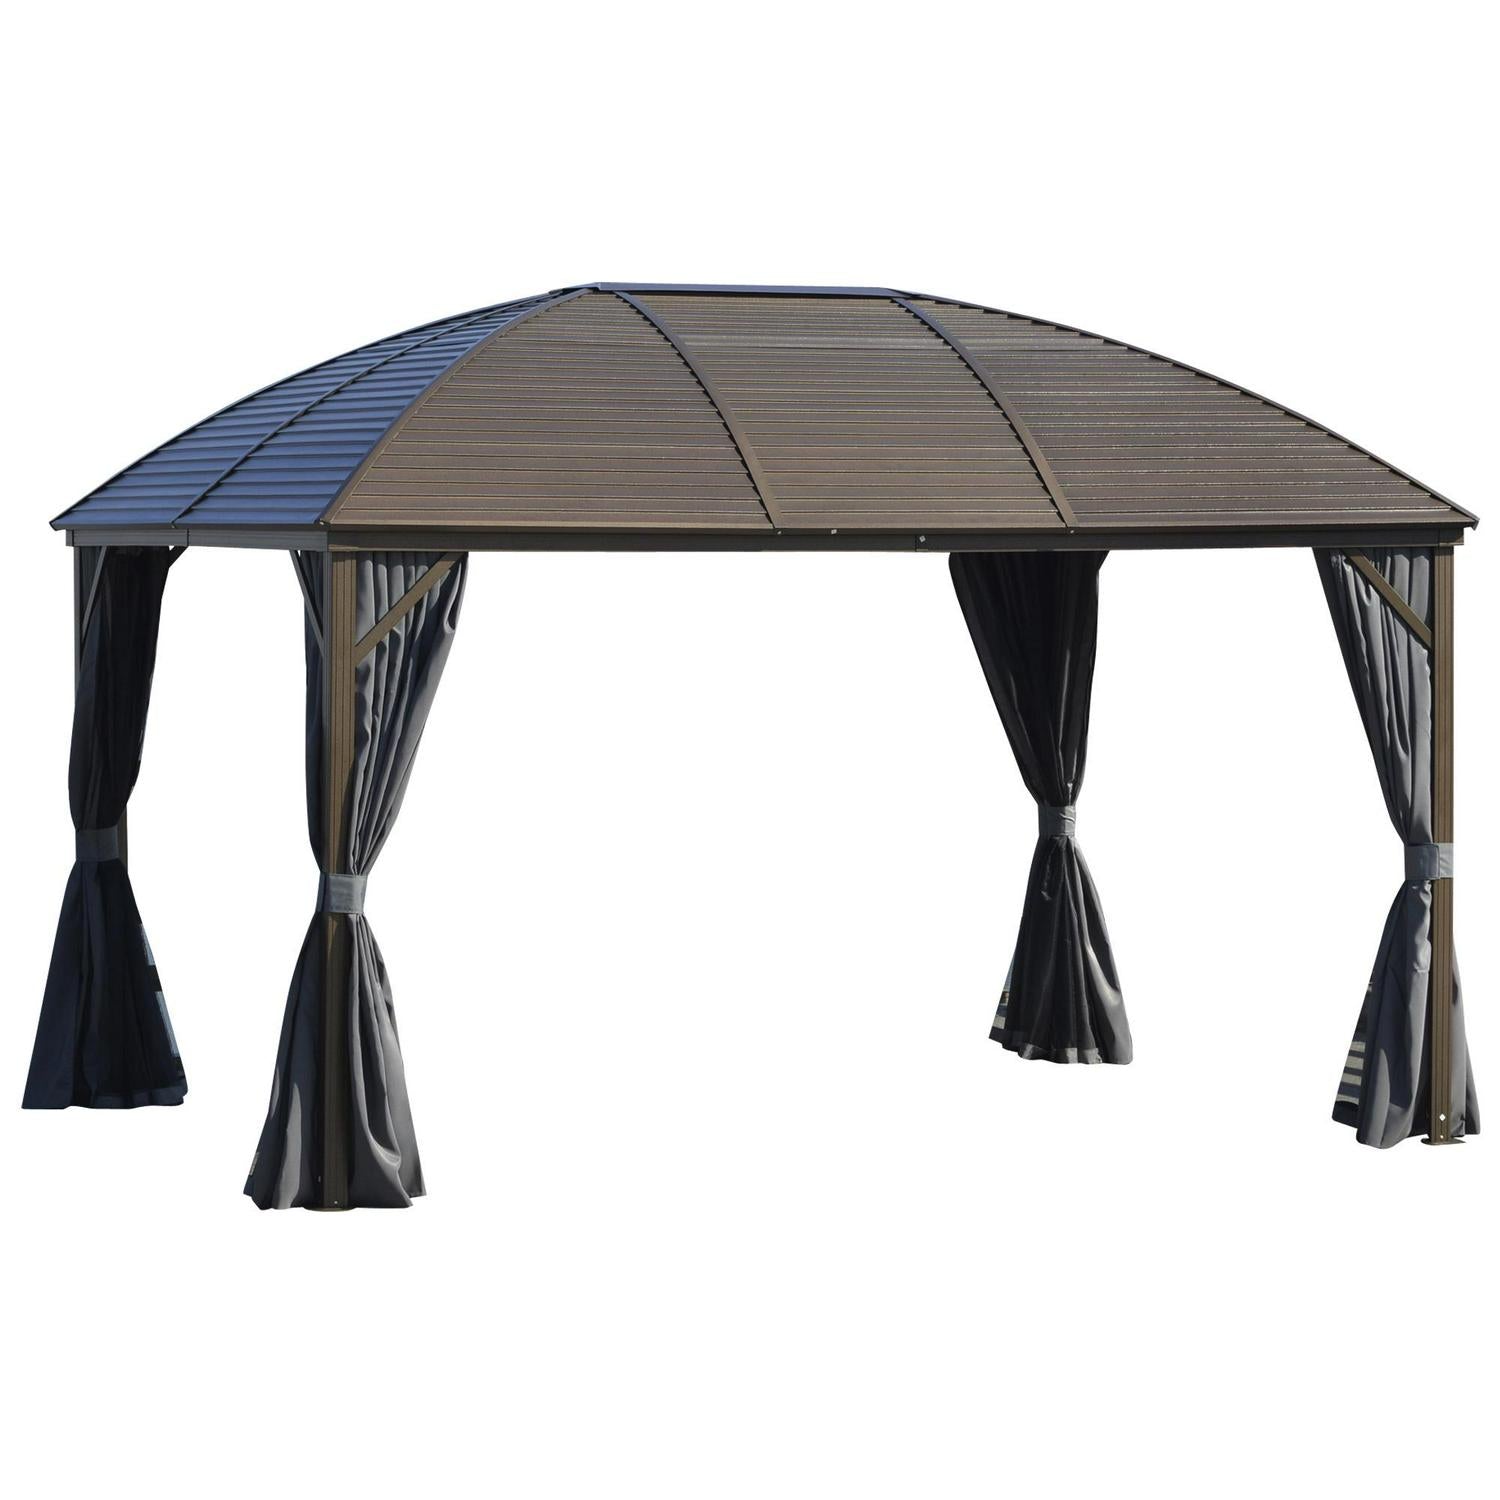 Patio Aluminium Gazebo Hardtop Metal Roof Canopy Party Tent - Dark Grey